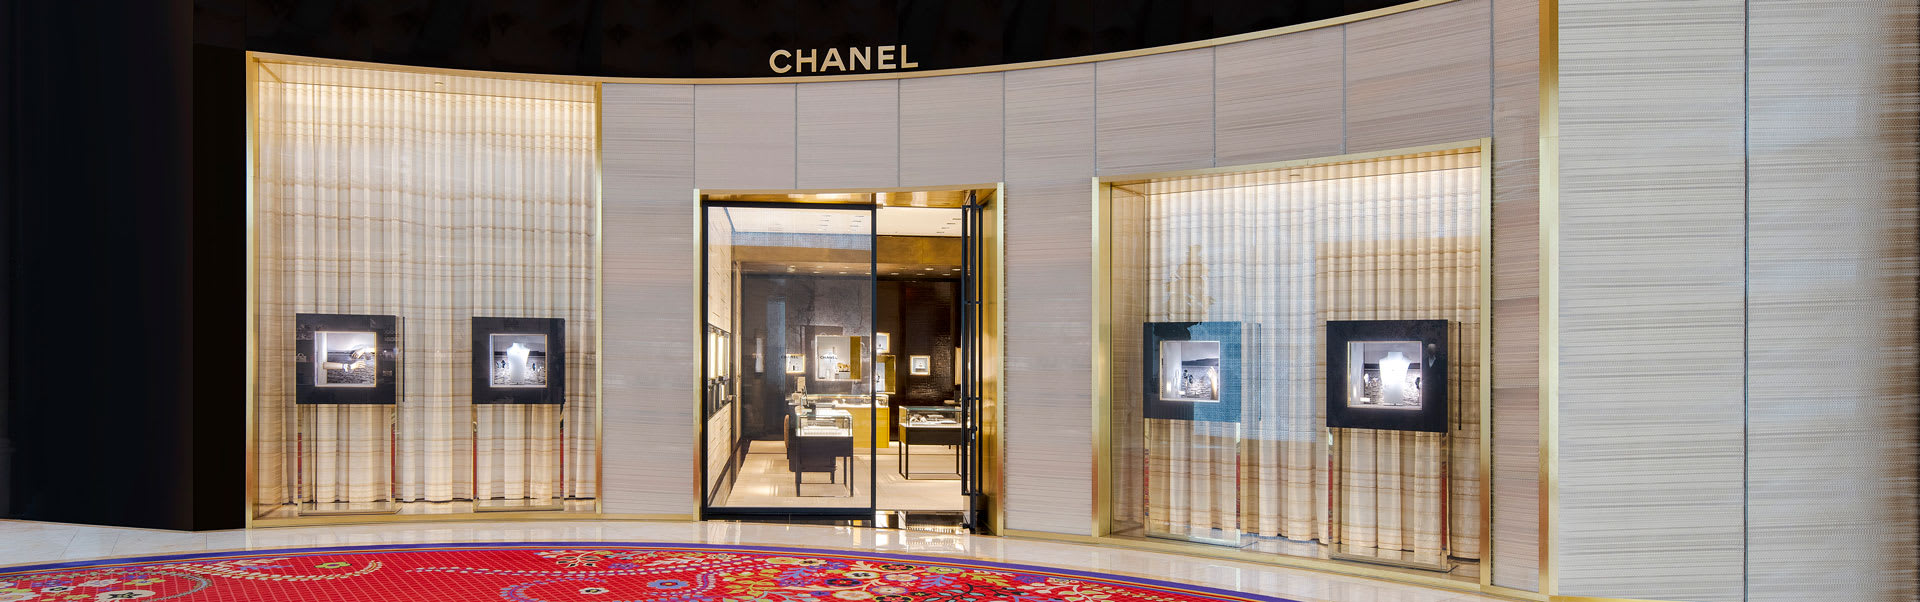 Tableau Chanel Las Vegas